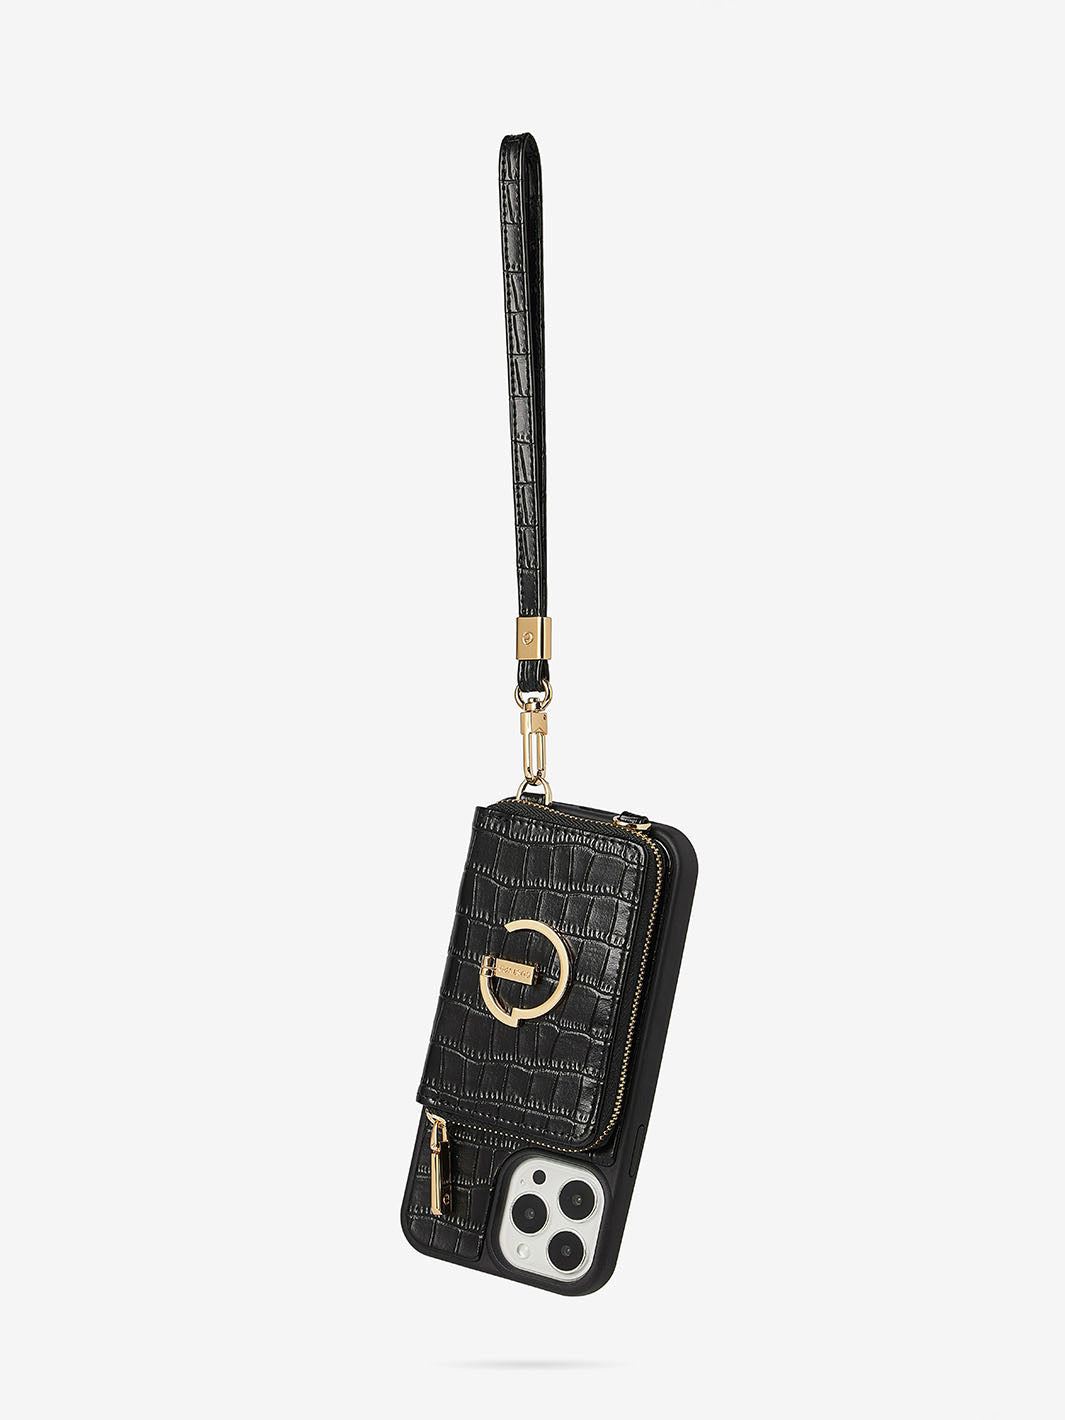 Custype Future X Crocodile crossbody iPhone case in black-4